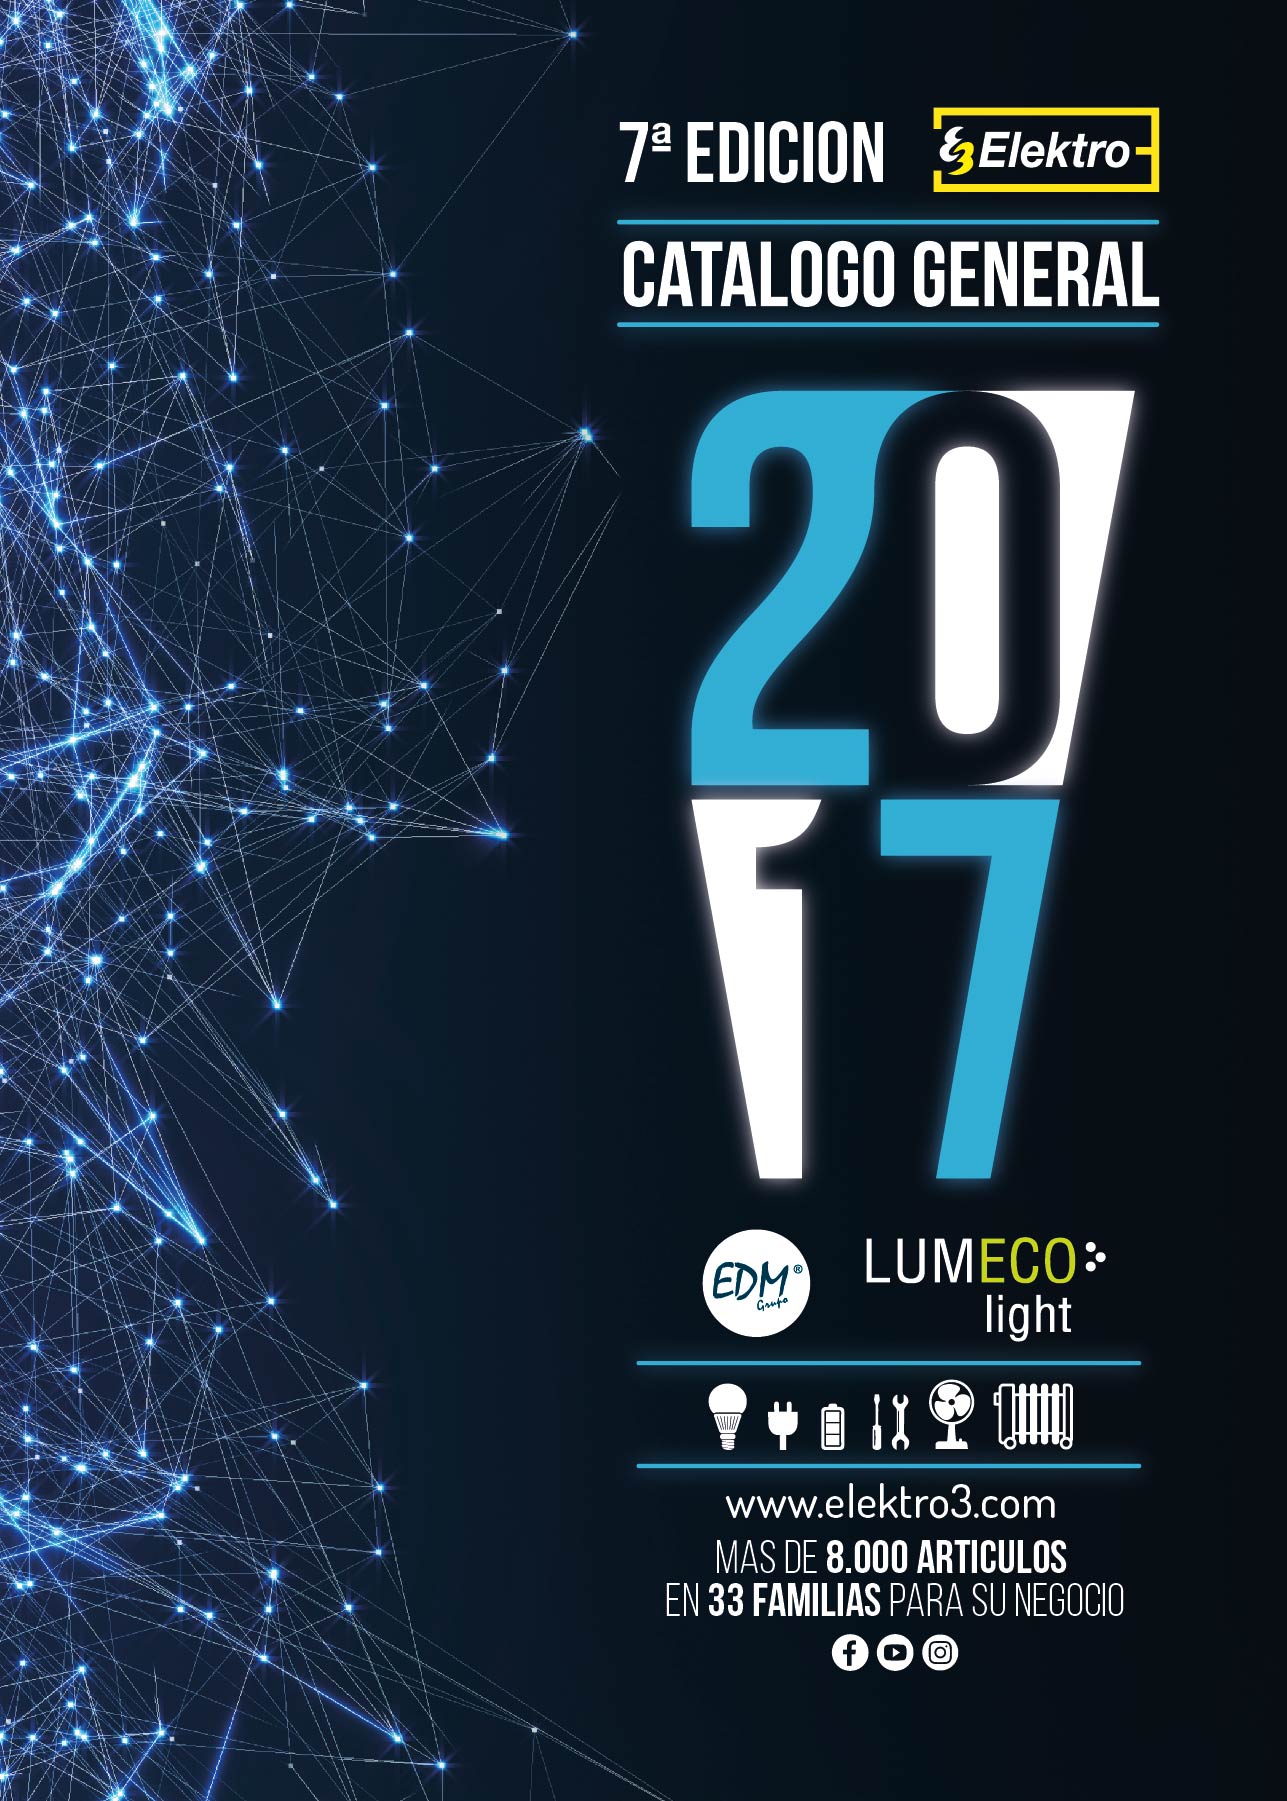 New general catalog Elektro3 2017 !!!